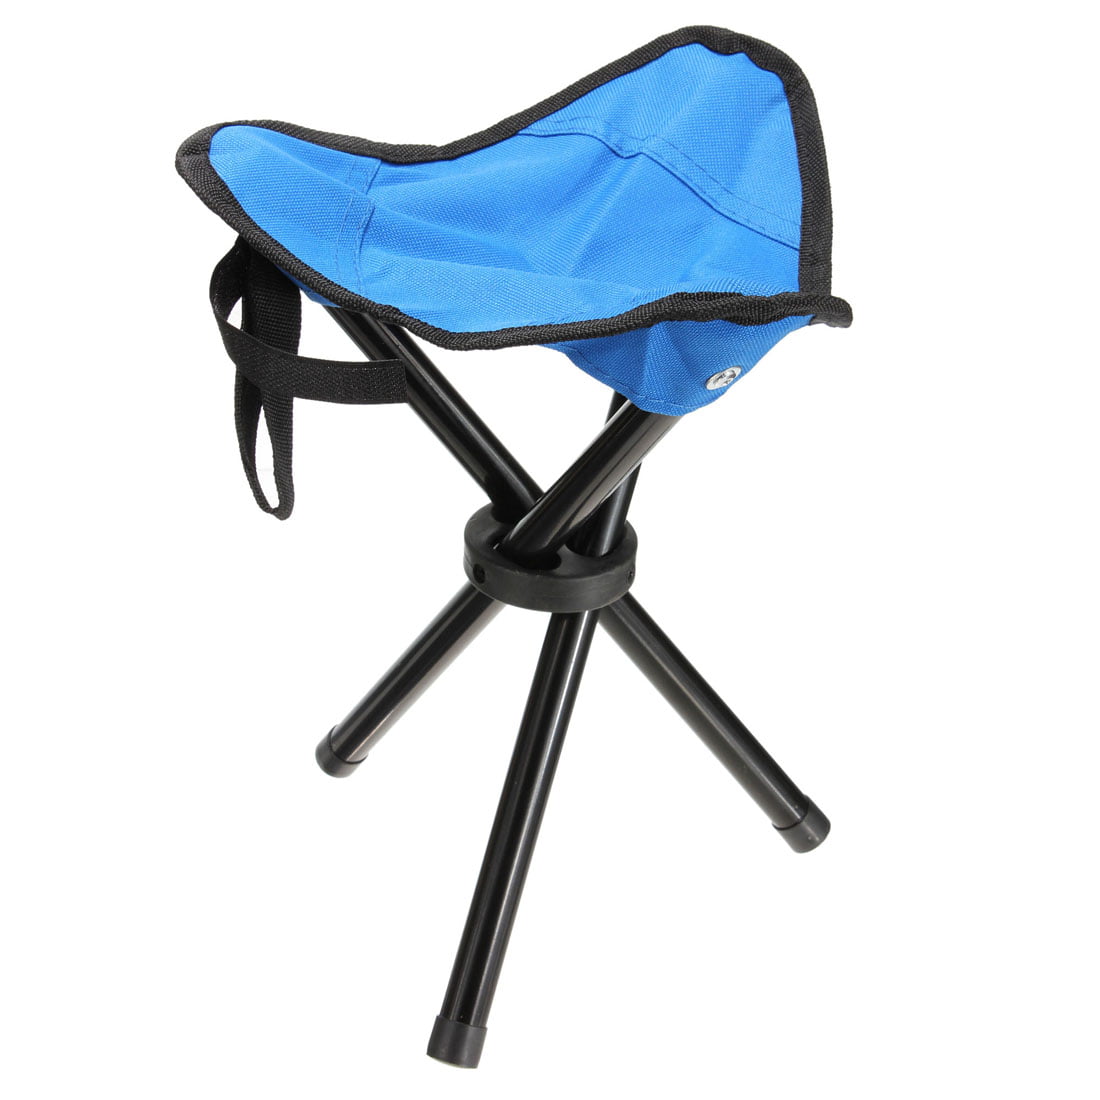 Outdoor Travel Folding Tripod Seat Camping Hiking Fishing Stool Picnic BBQ Chair 